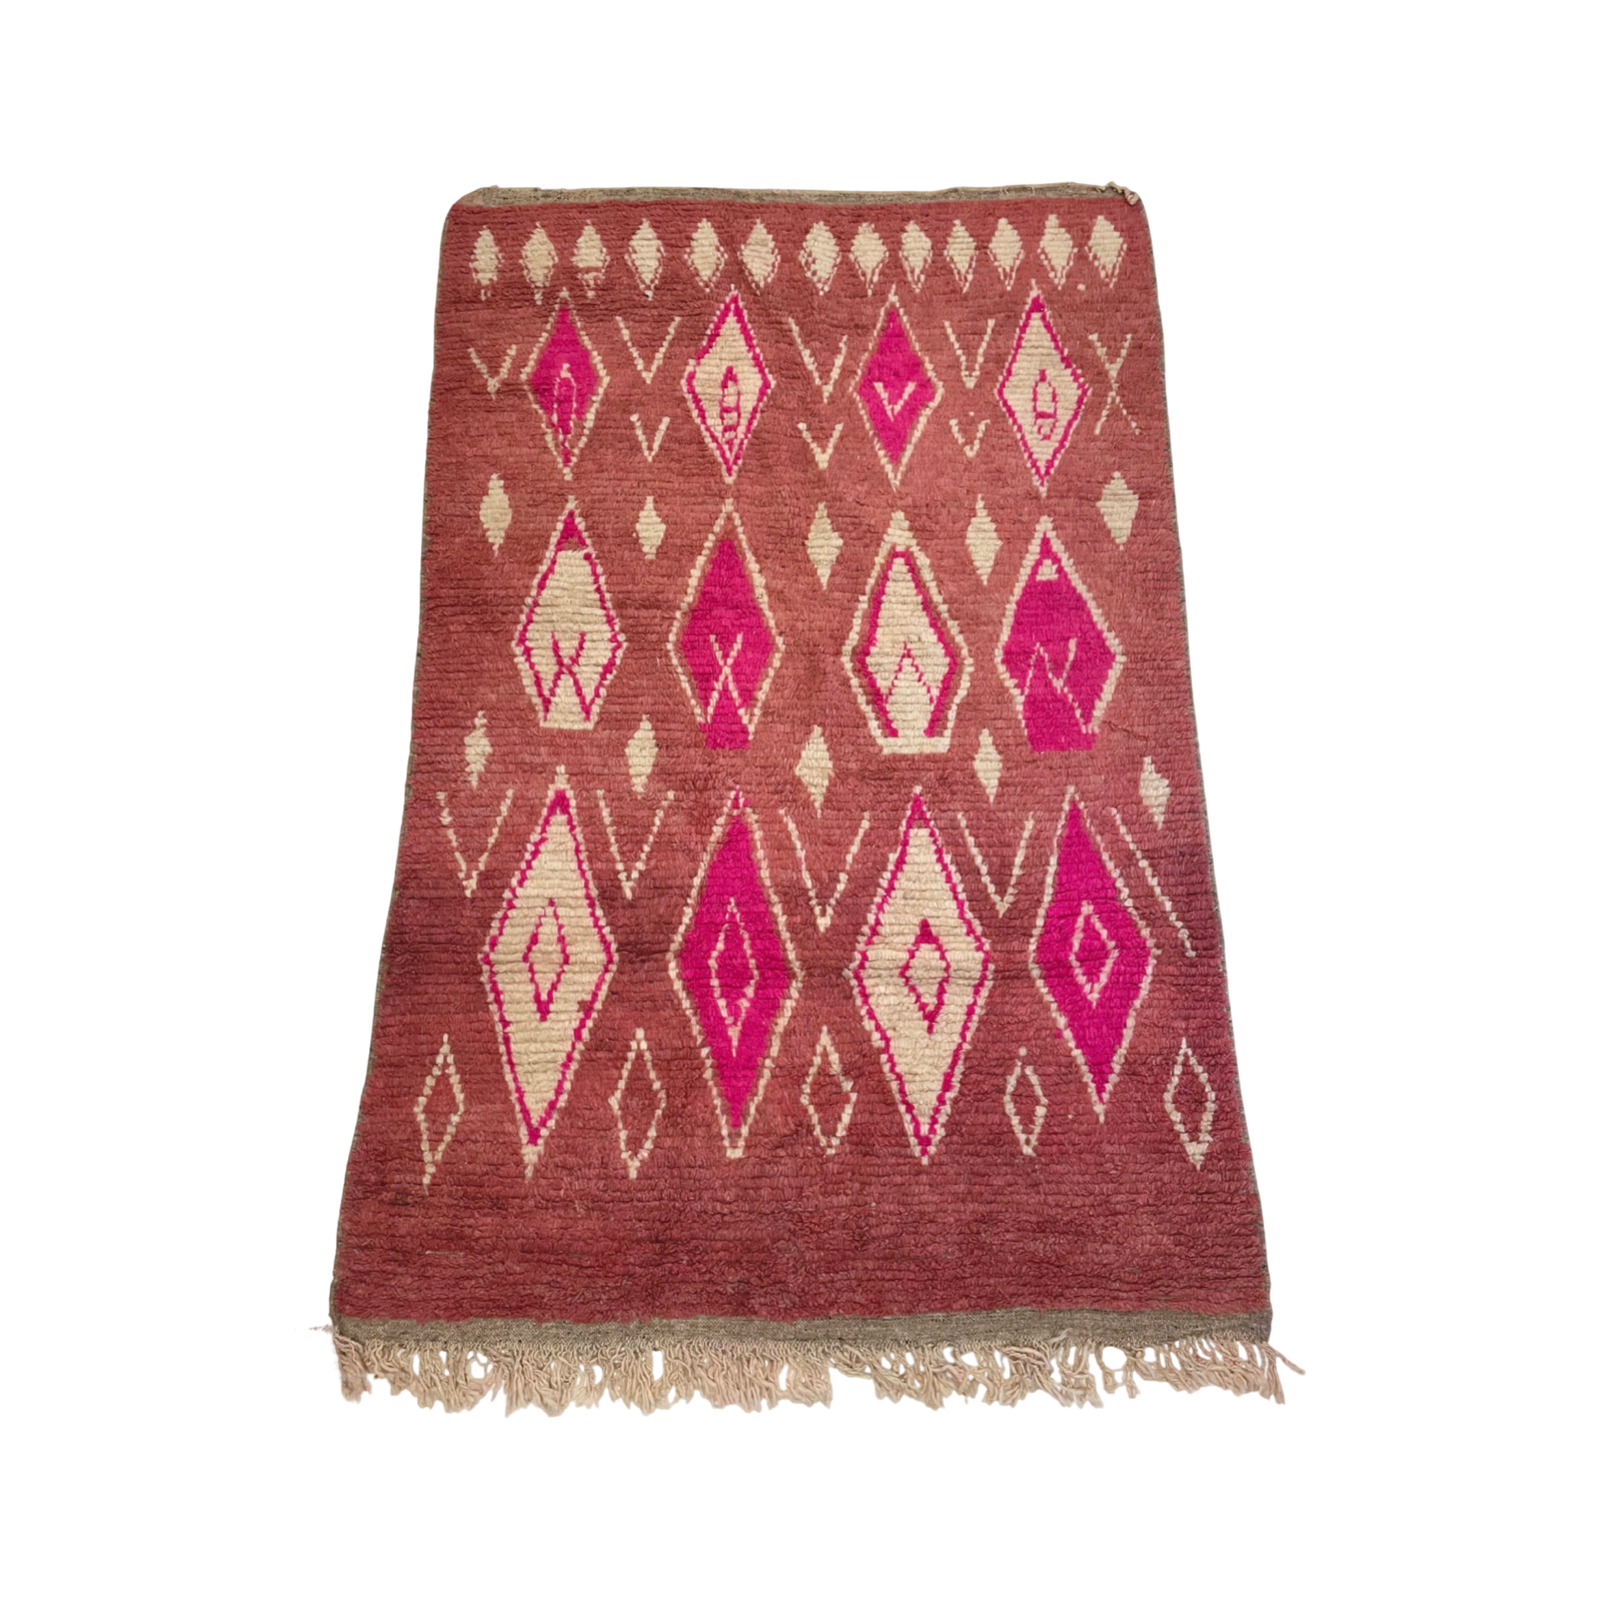 Pink and brown Moroccan rug with diamond motifs - Kantara | Moroccan Rugs